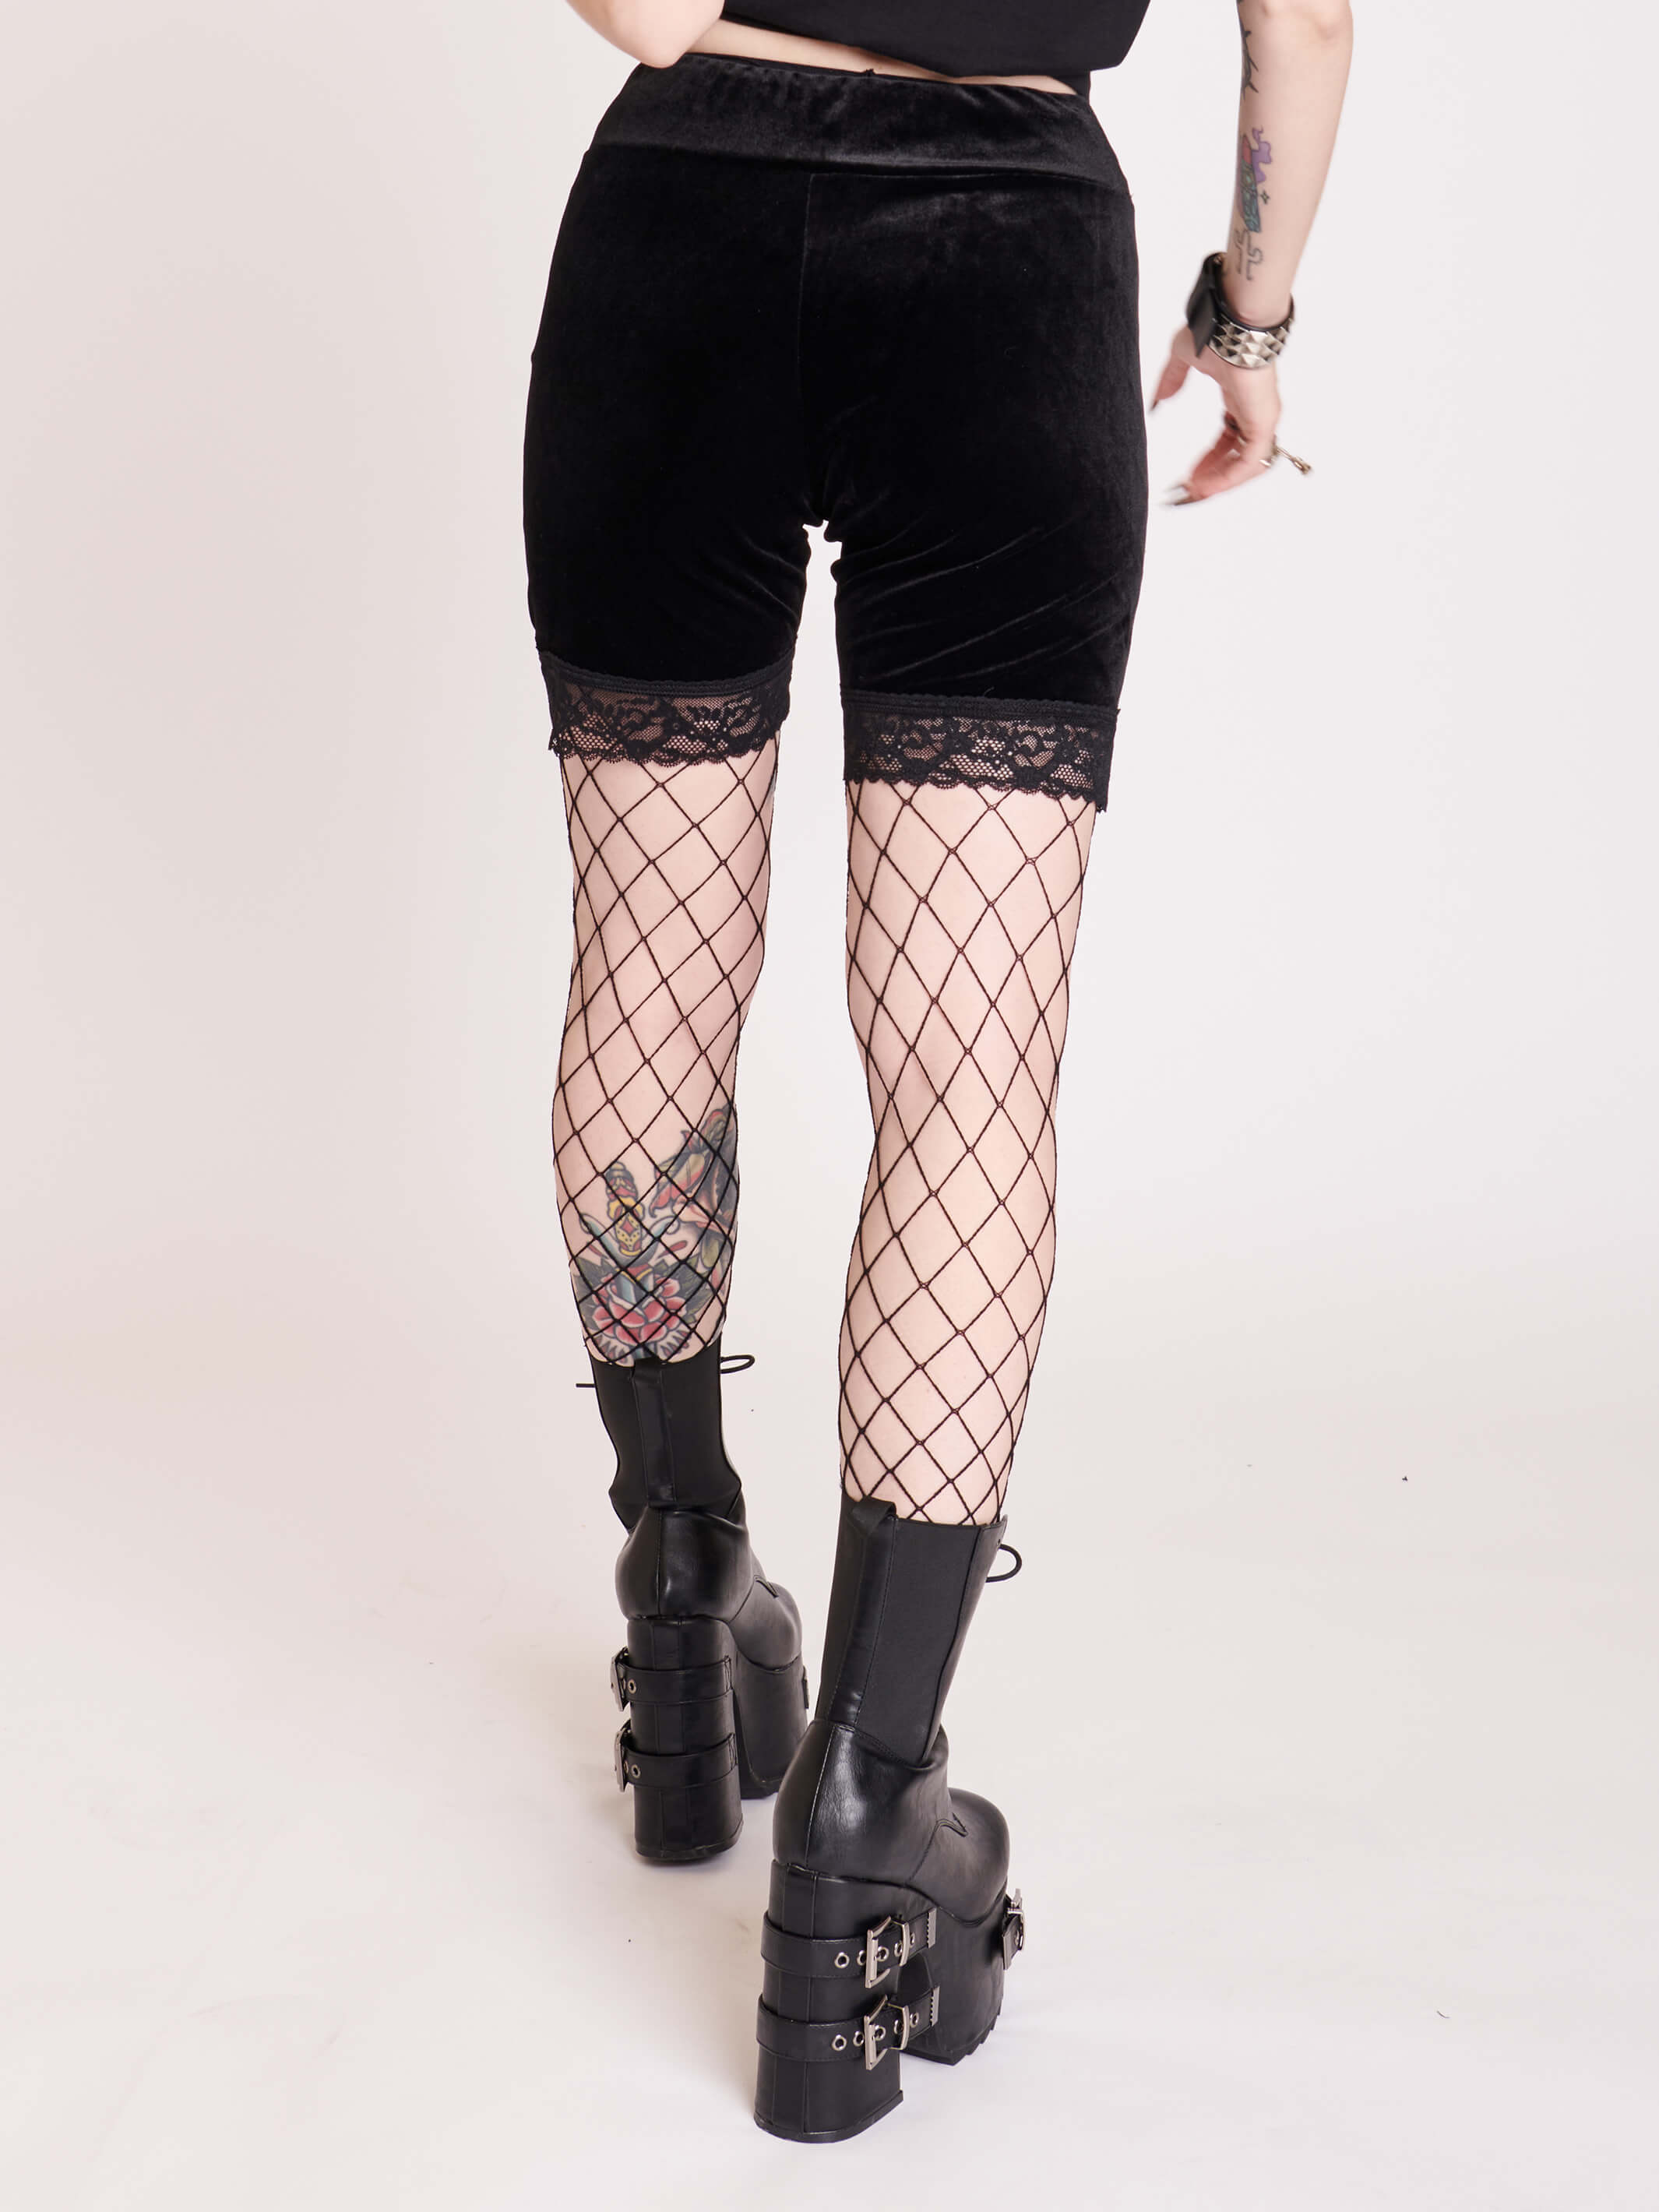 Black velvet stretch bike shorts with lace hem